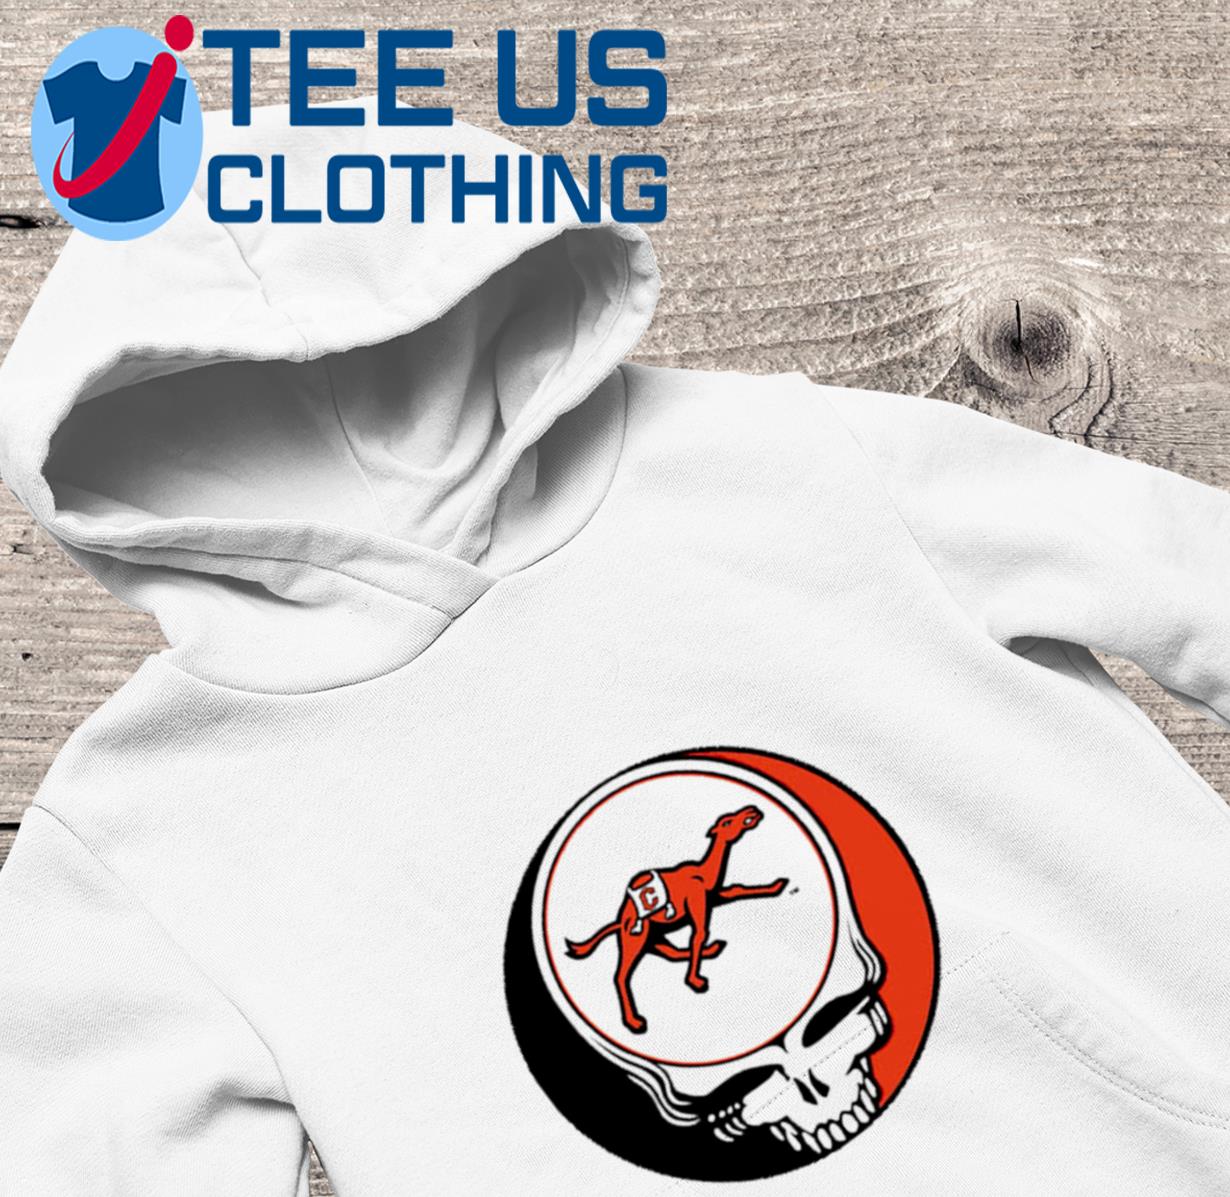 Grateful Dead Camel 2023 shirt, hoodie, sweatshirt and tank top